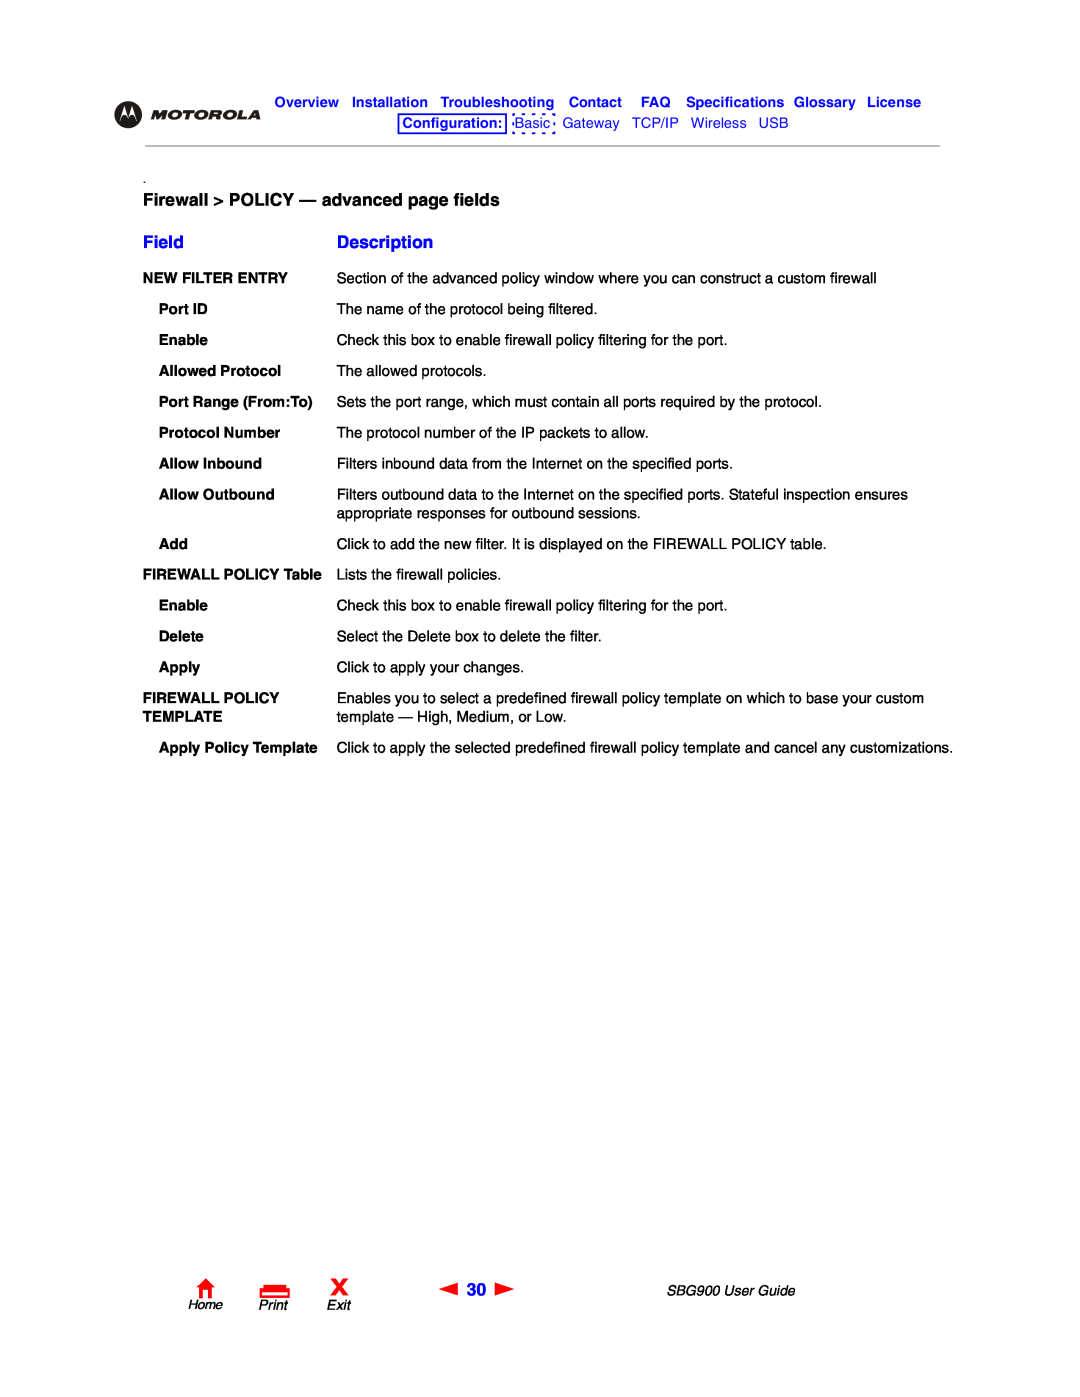 Motorola SBG900 manual Firewall POLICY - advanced page fields, Field, Description, Home Print Exit 